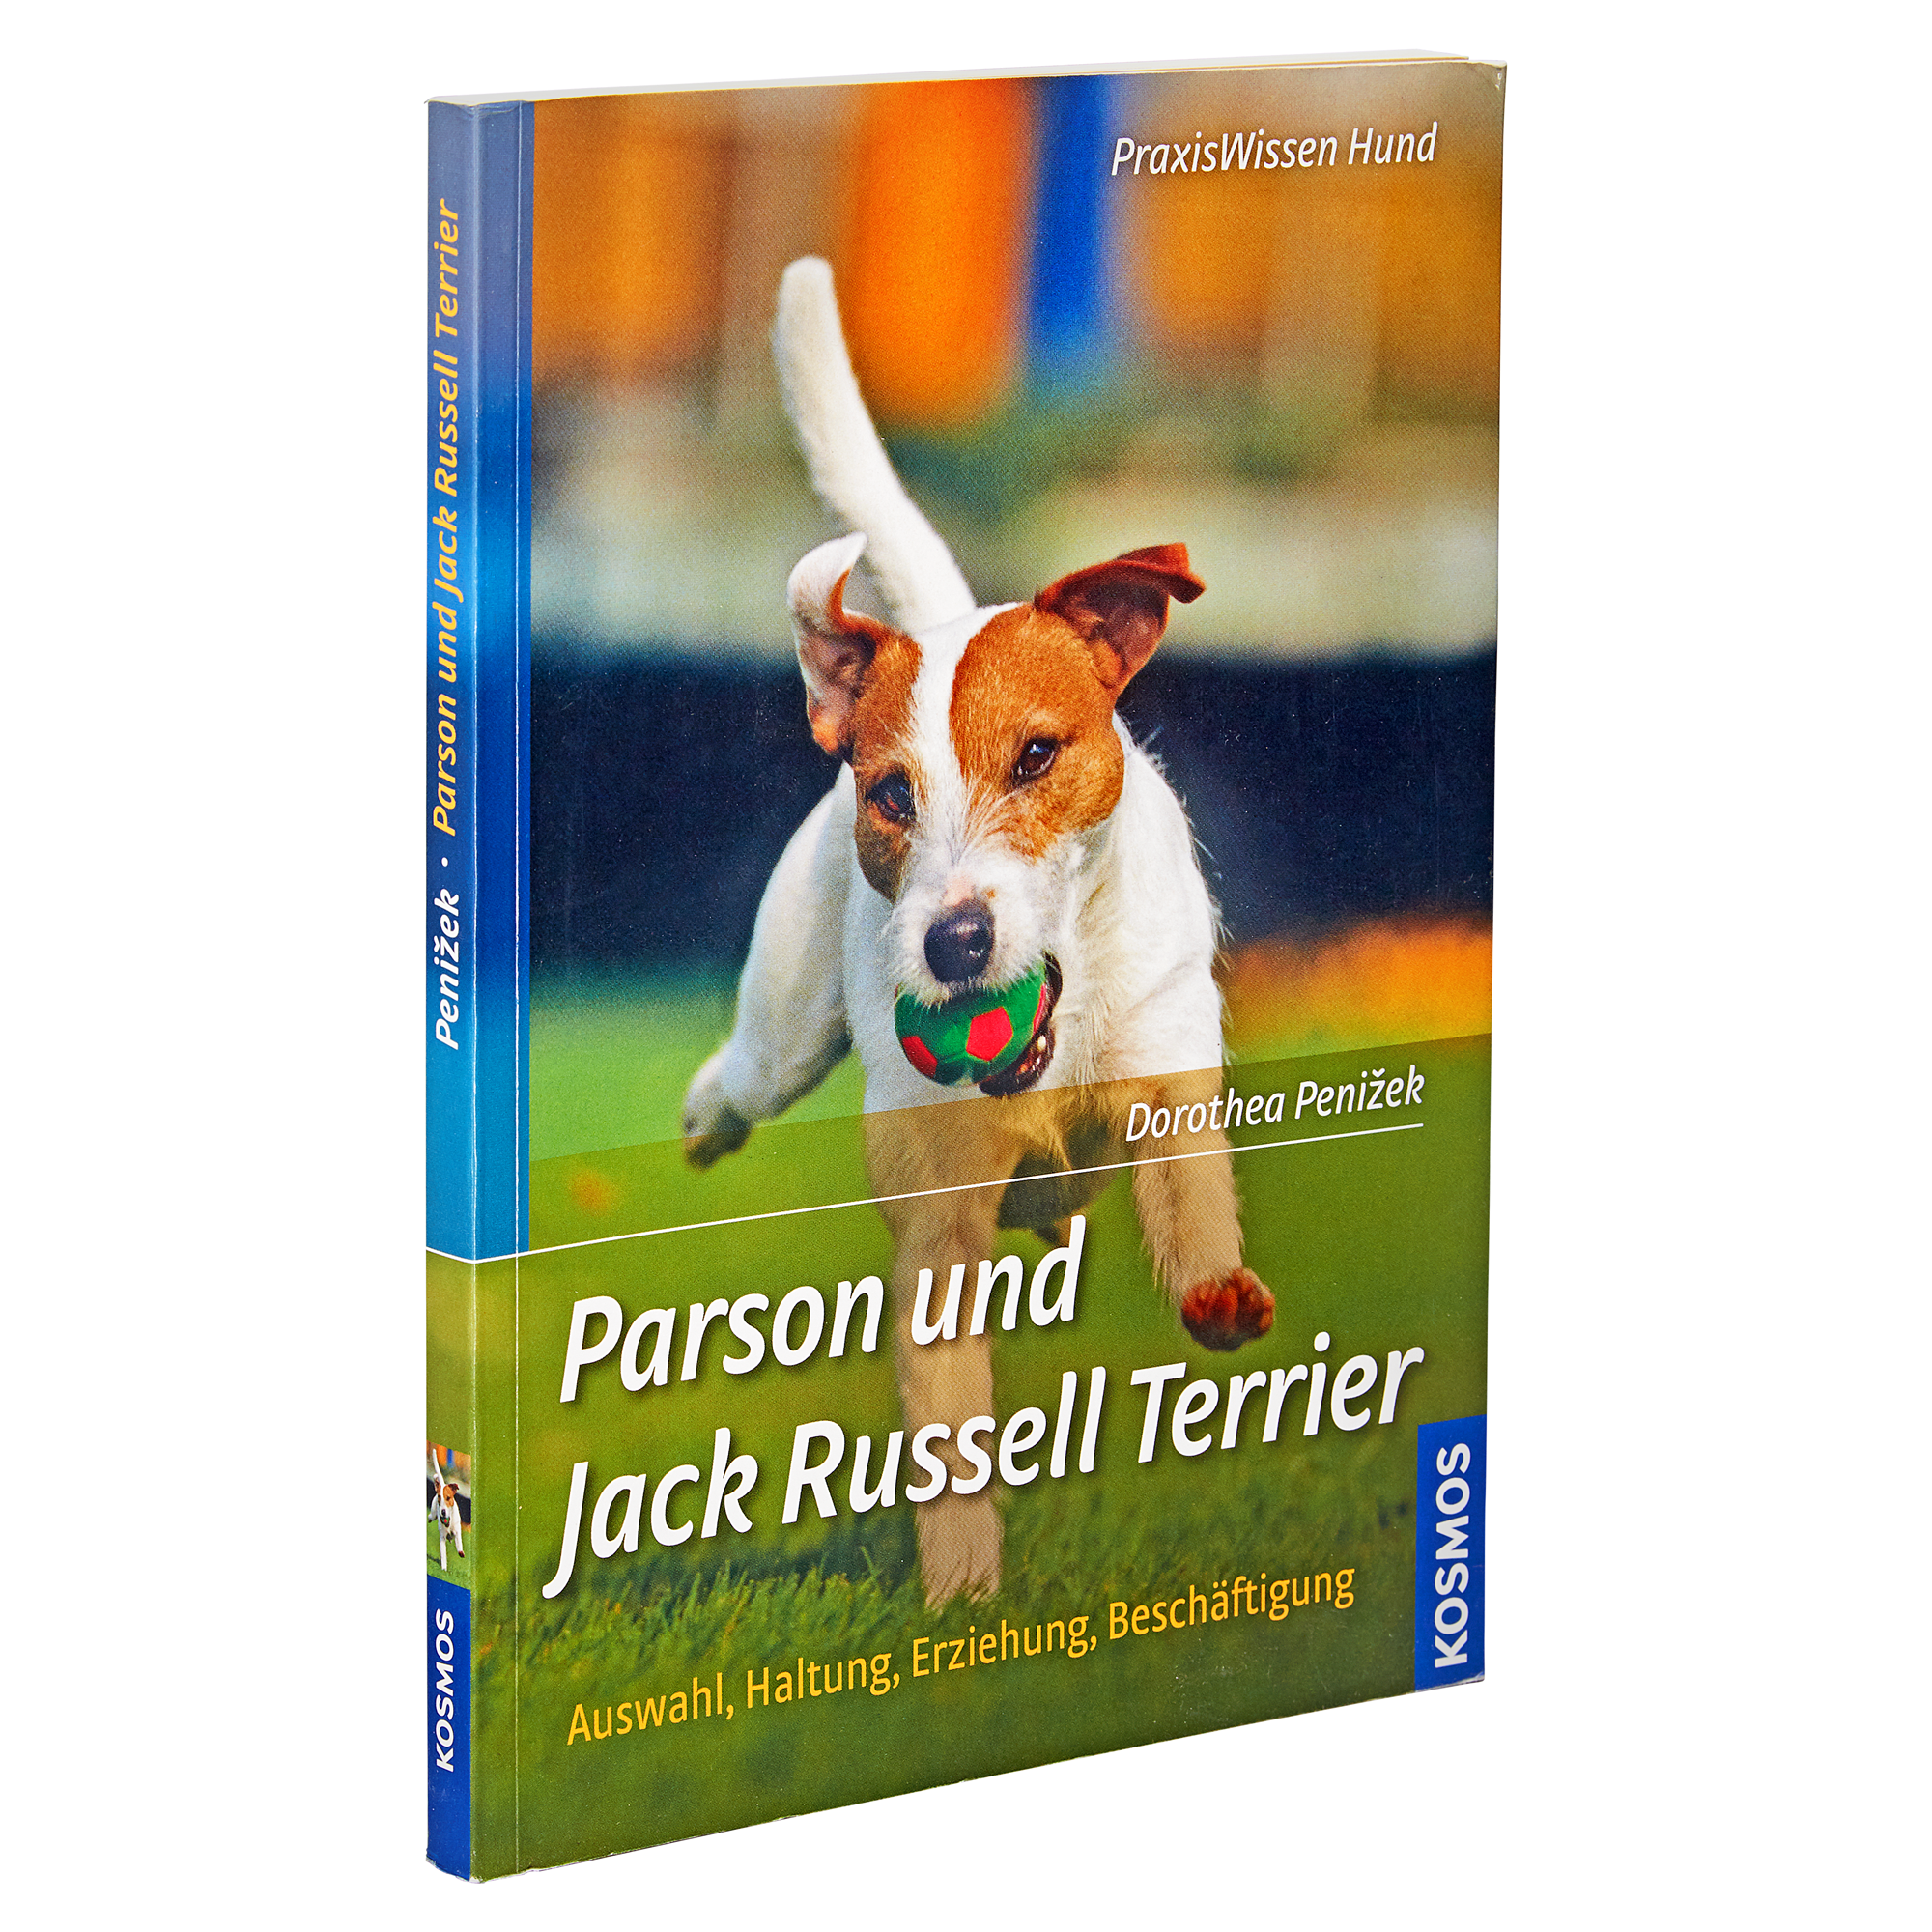 Kosmos-Tierratgeber "Parson und Jack Russell Terrier" PB 128 S. + product picture